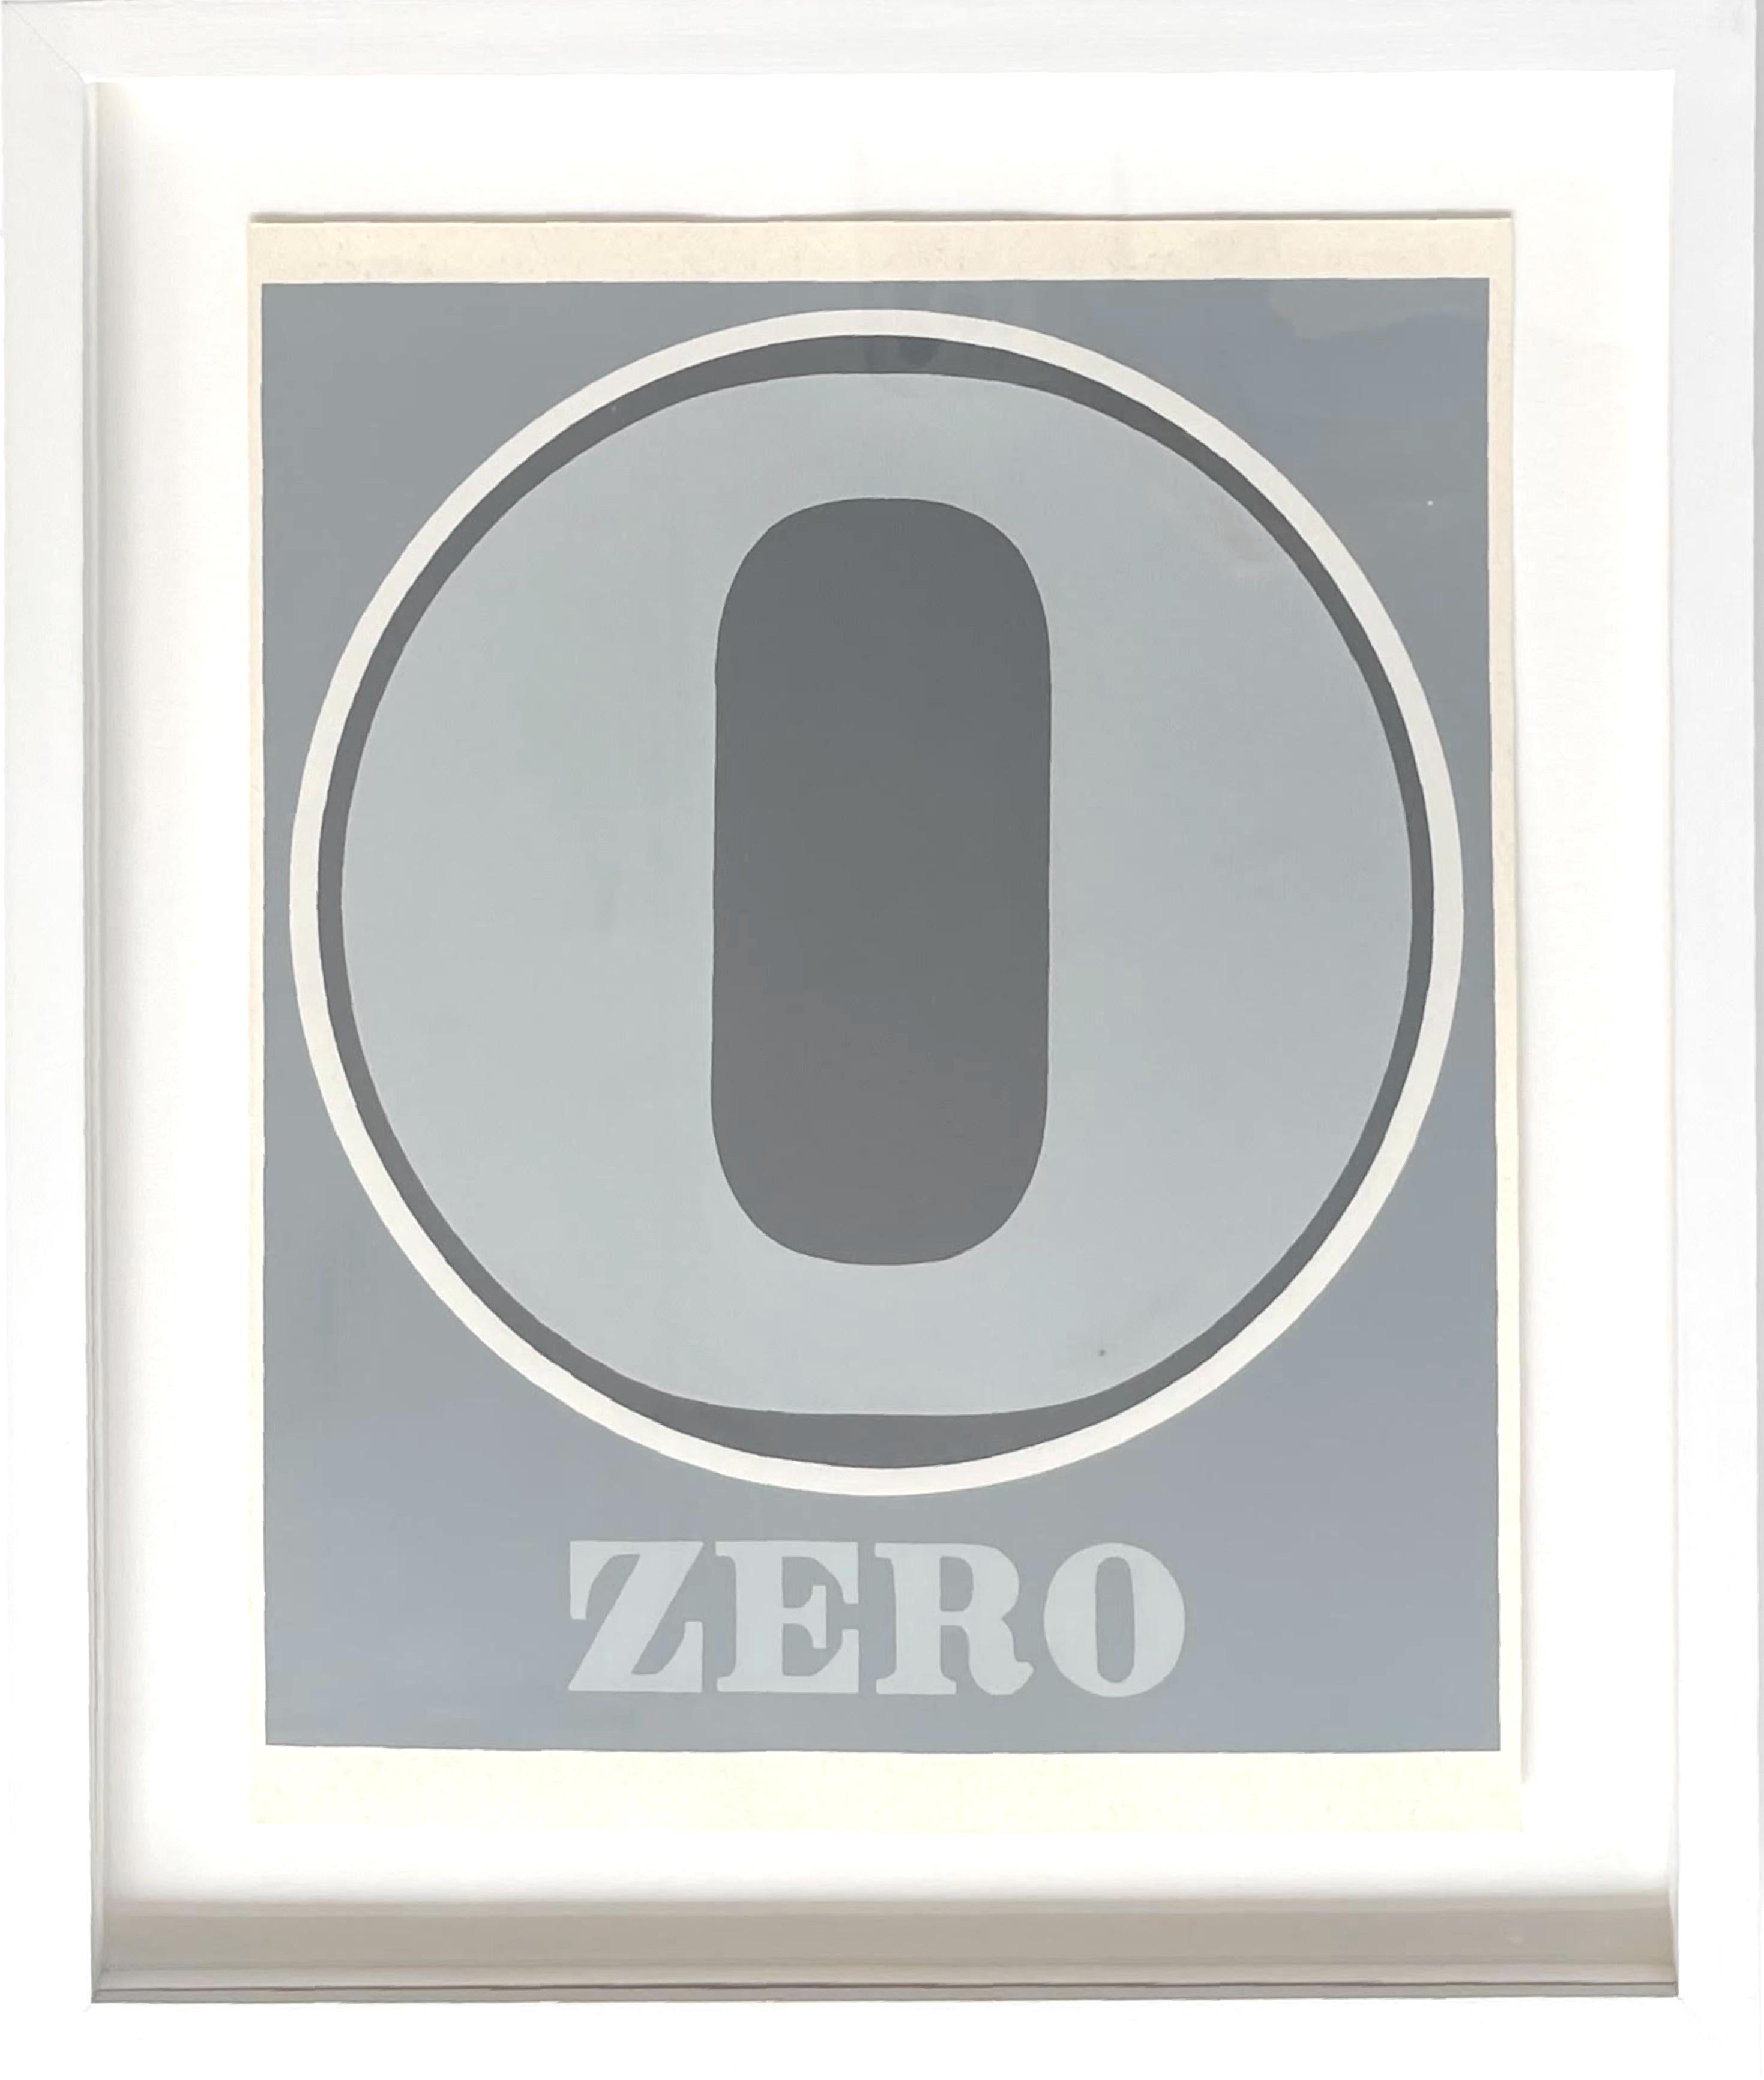 0 (Zero), from the original Numbers portfolio (Sheehan 46-55)